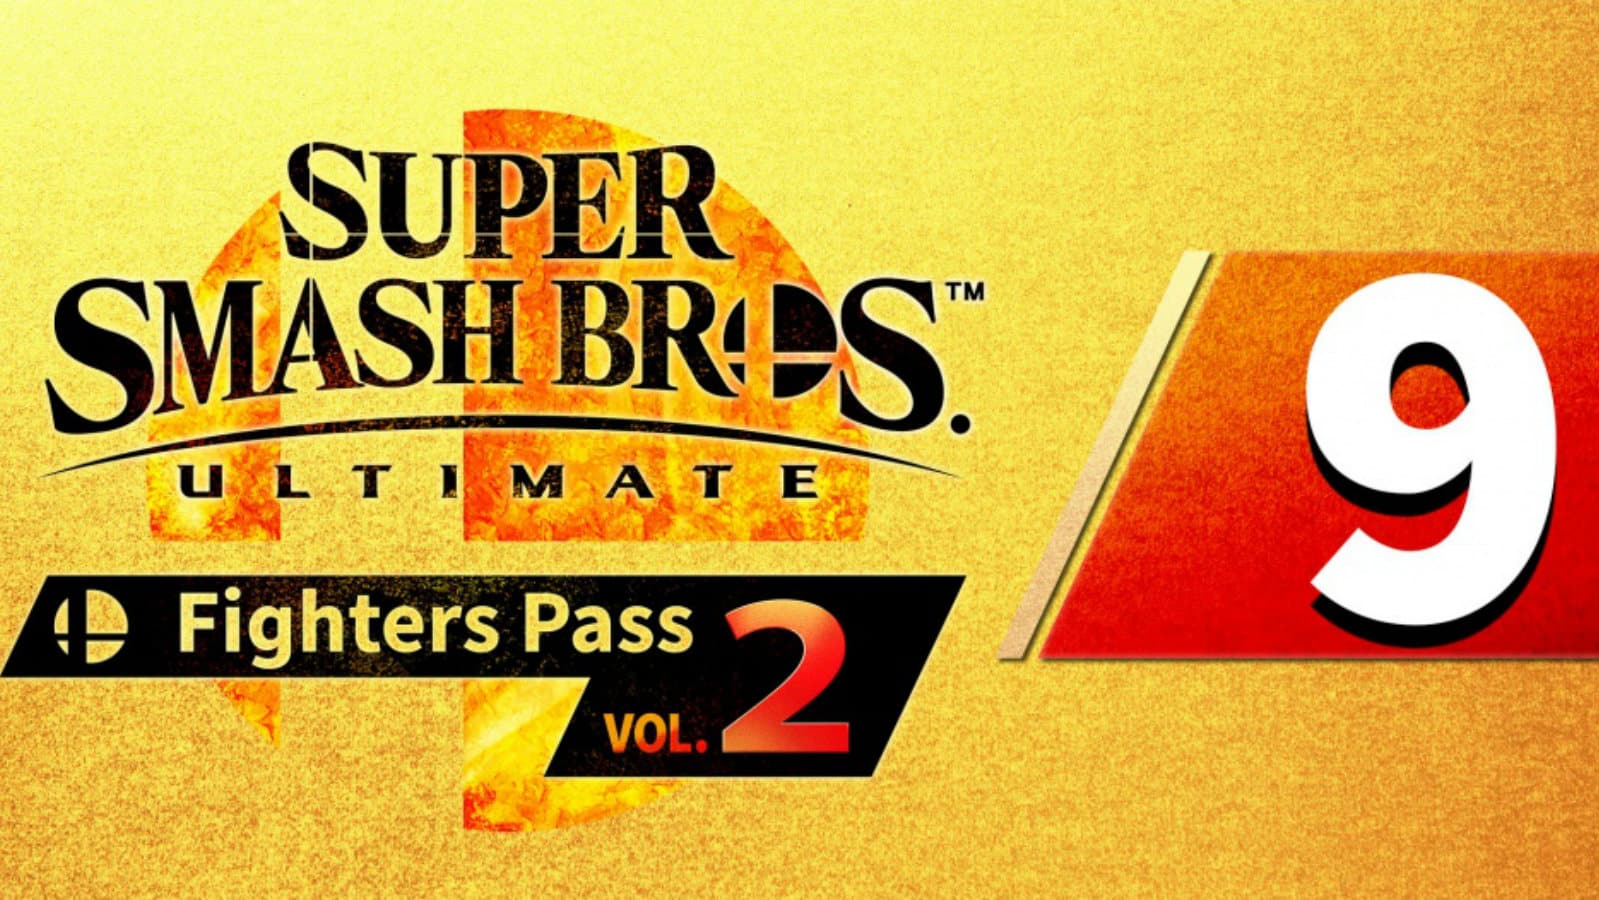 Final Super Smash Bros amiibo  Sora release date and packaging